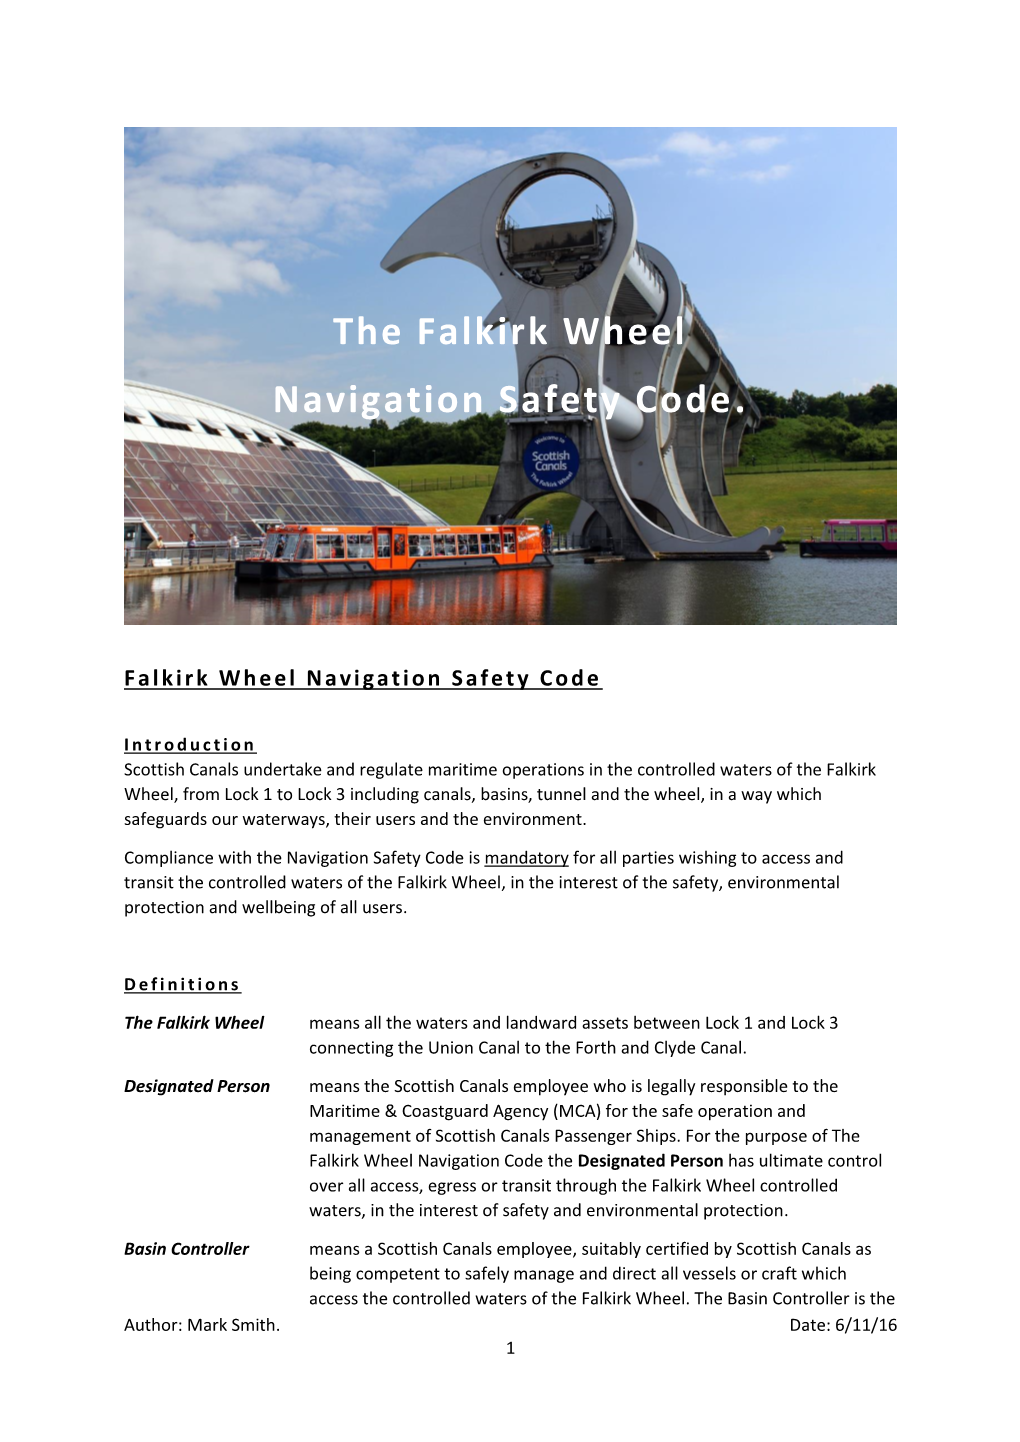 The Falkirk Wheel Navigation Safety Code